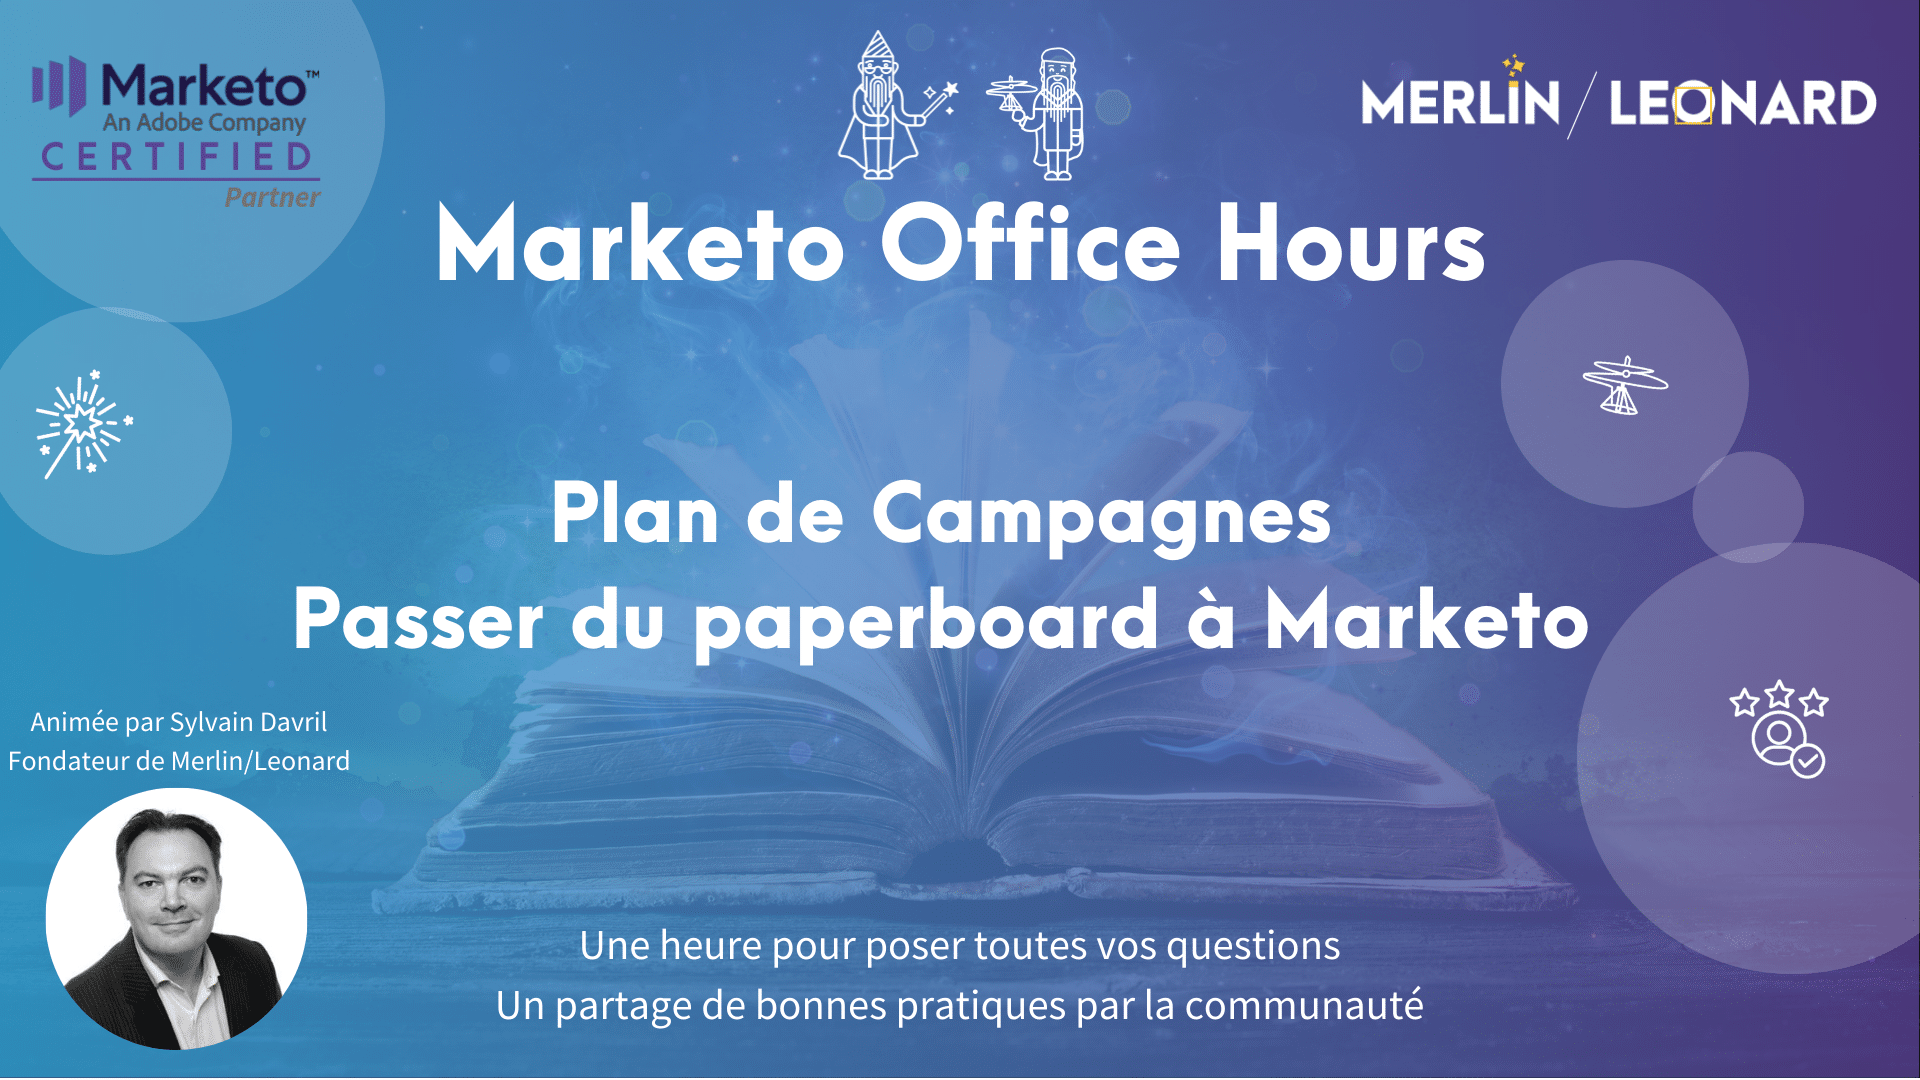 MerlinLeonard Marketo Office Hours 2021 06 18 - Plan de Campagnes - Passer du paperboard à Marketo